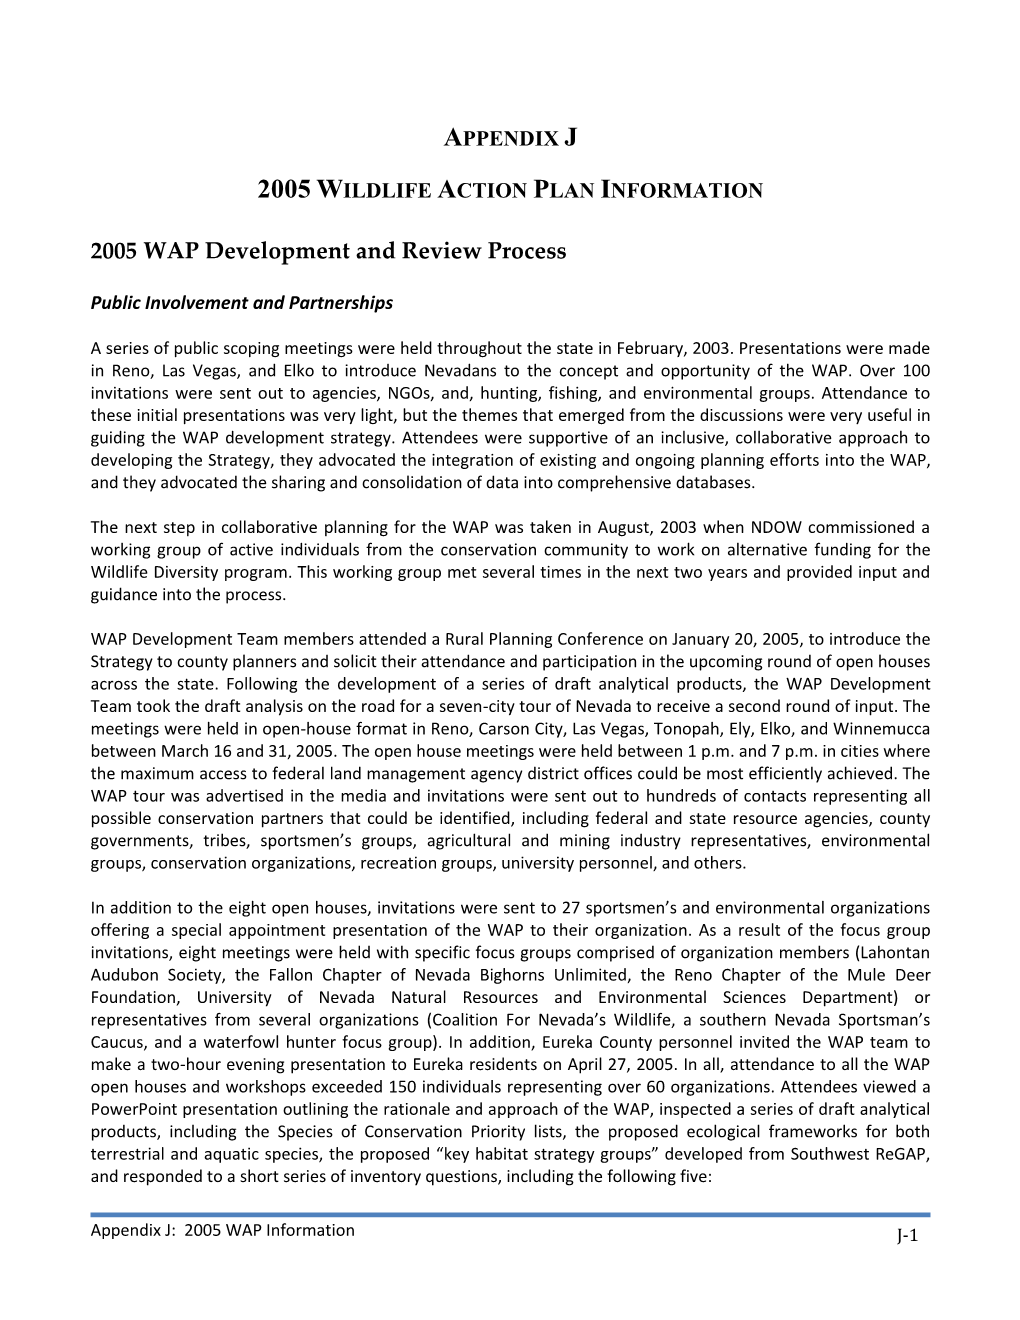 2005 WAP Development and Review Process